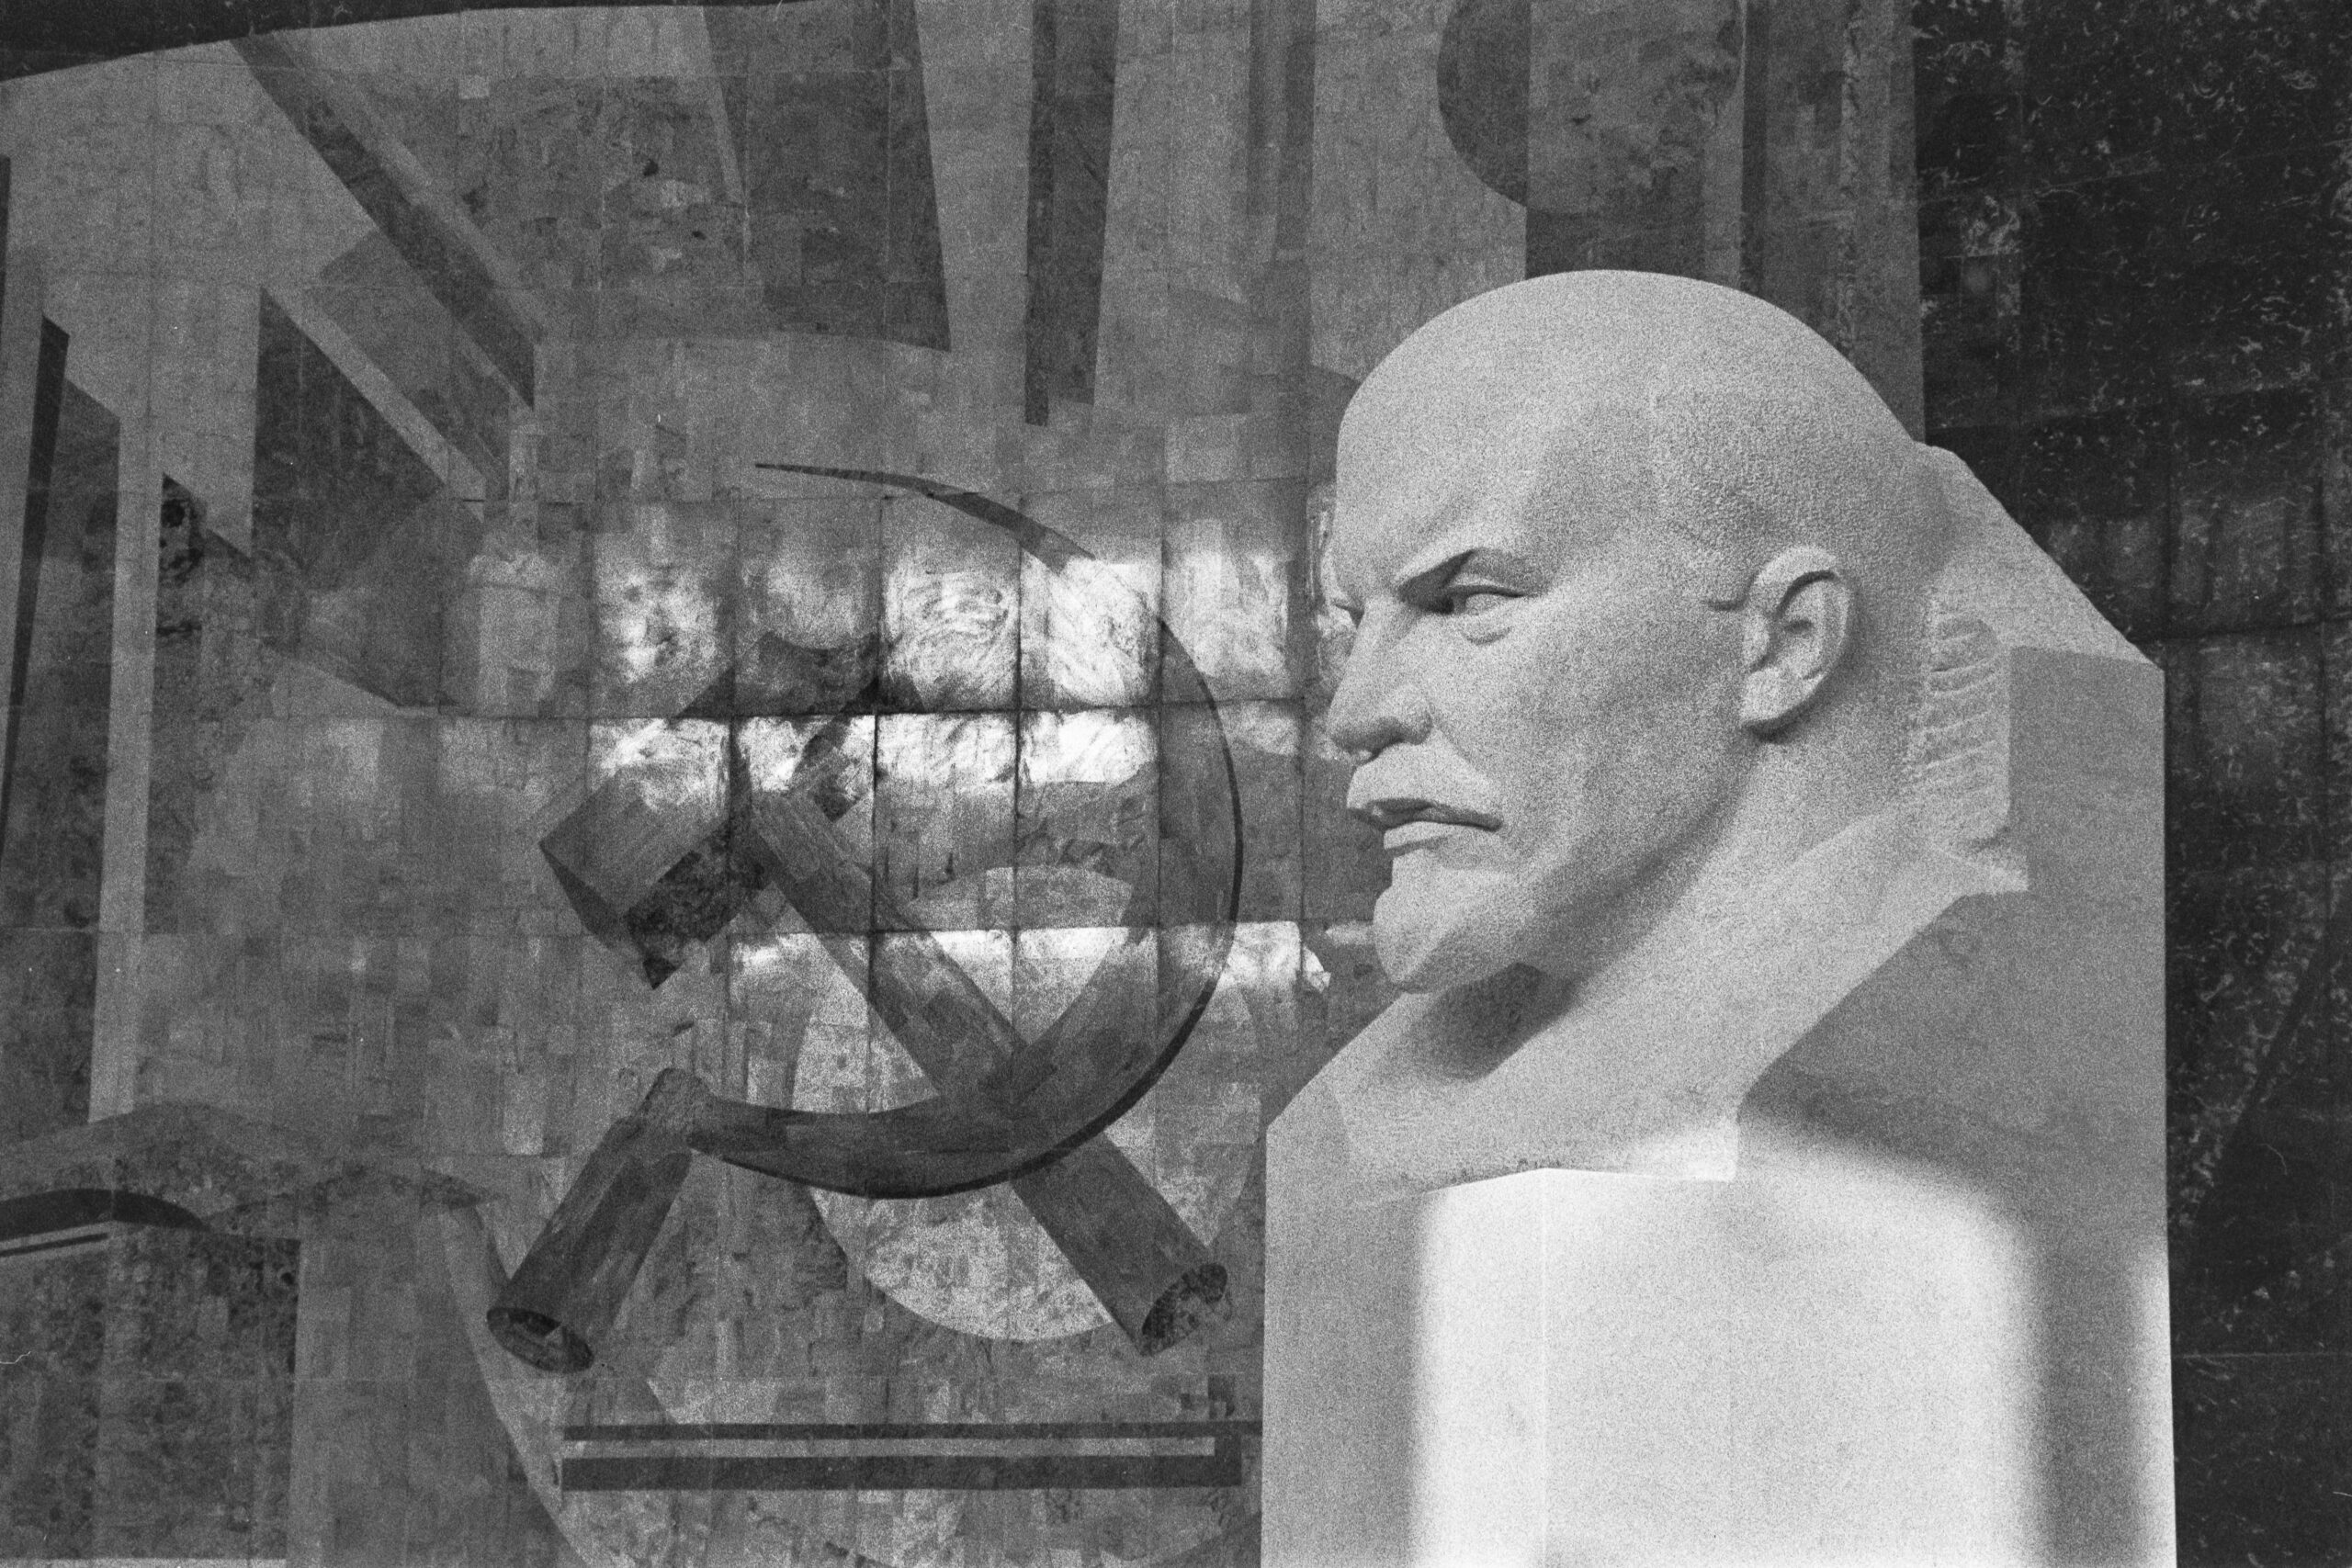 Lenin subversion of American values through disinformation